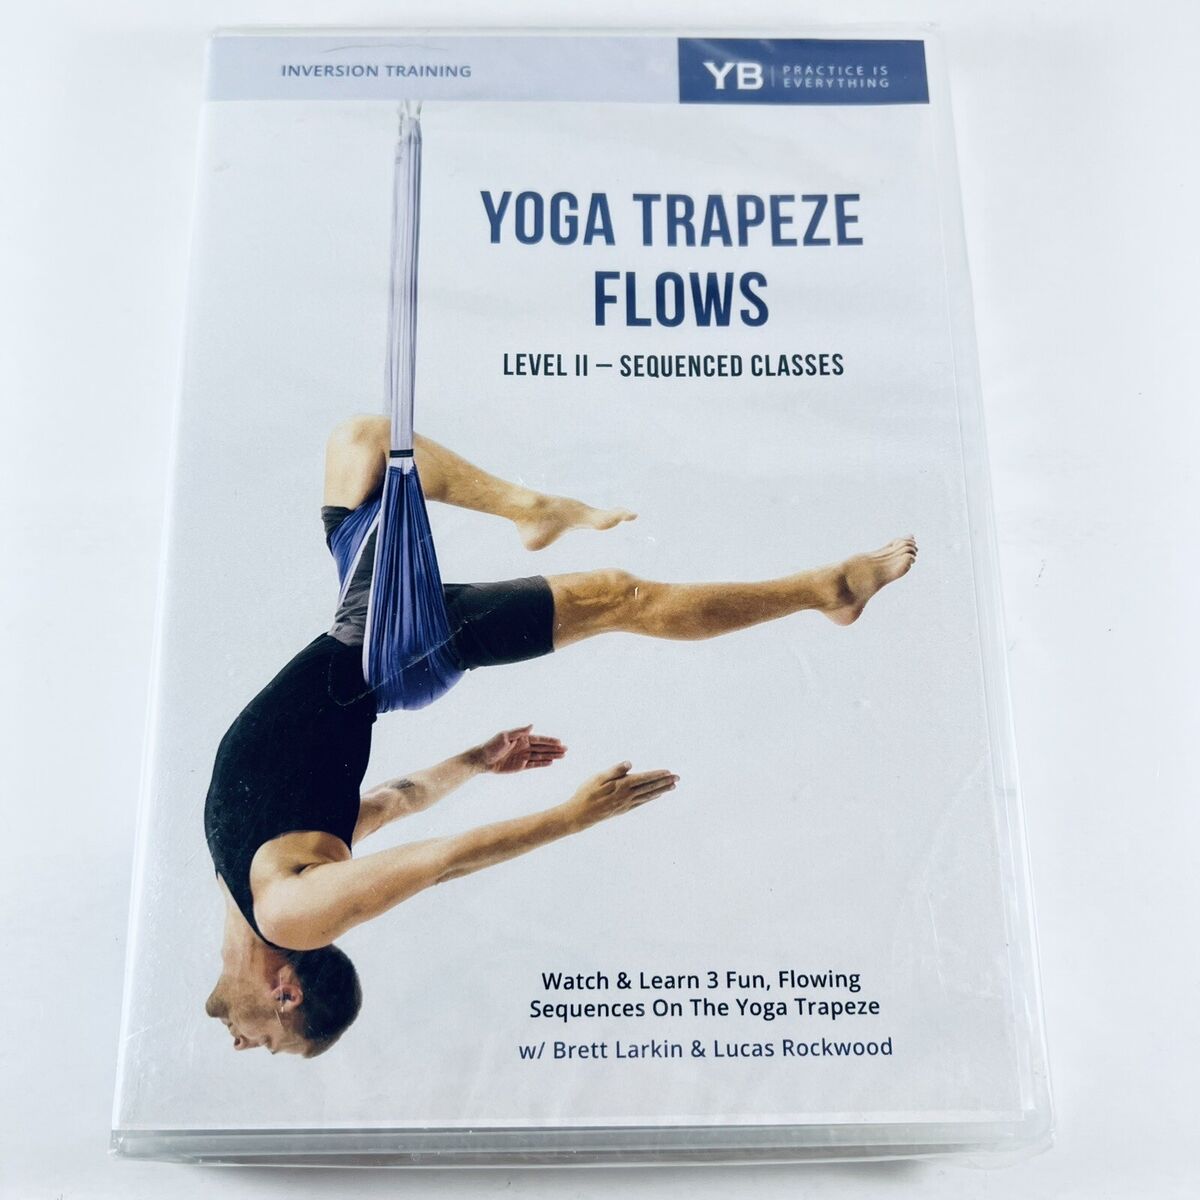 YOGABODY Yoga Trapeze Flows Level II 2 DVD - 3 Flow Sequences Inversion  Training